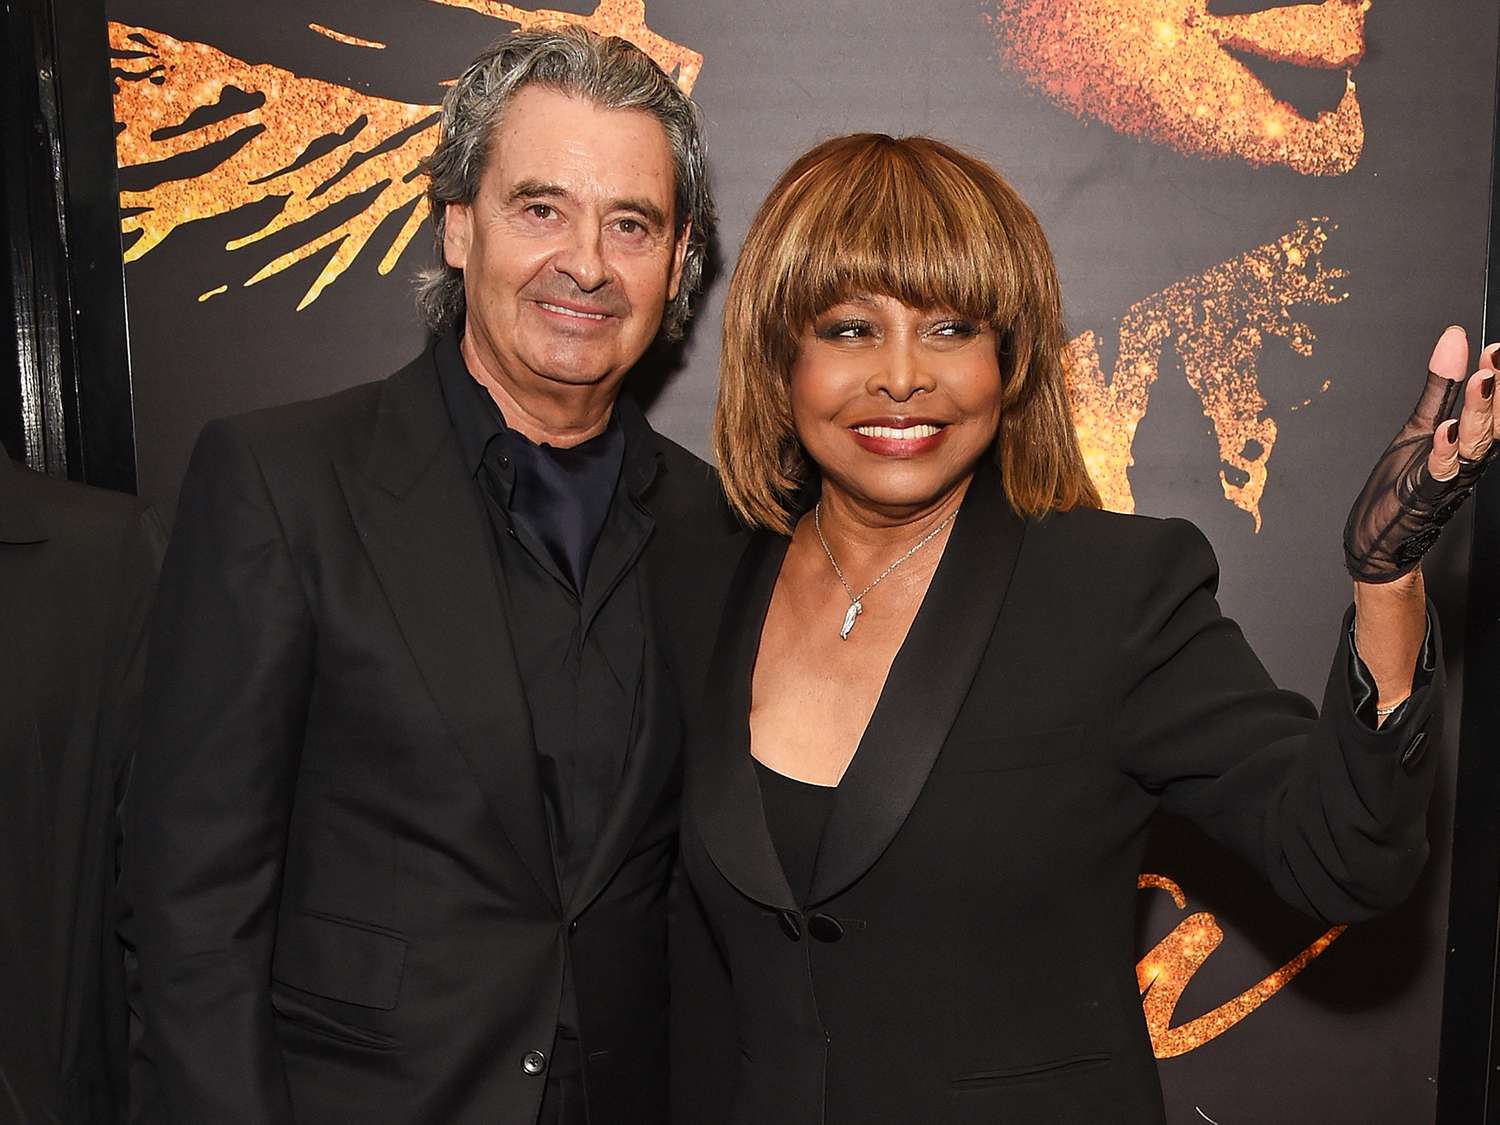 Erwin Bach e Tina Turner em 2018. Imagem: David M. Benett/Getty Images.